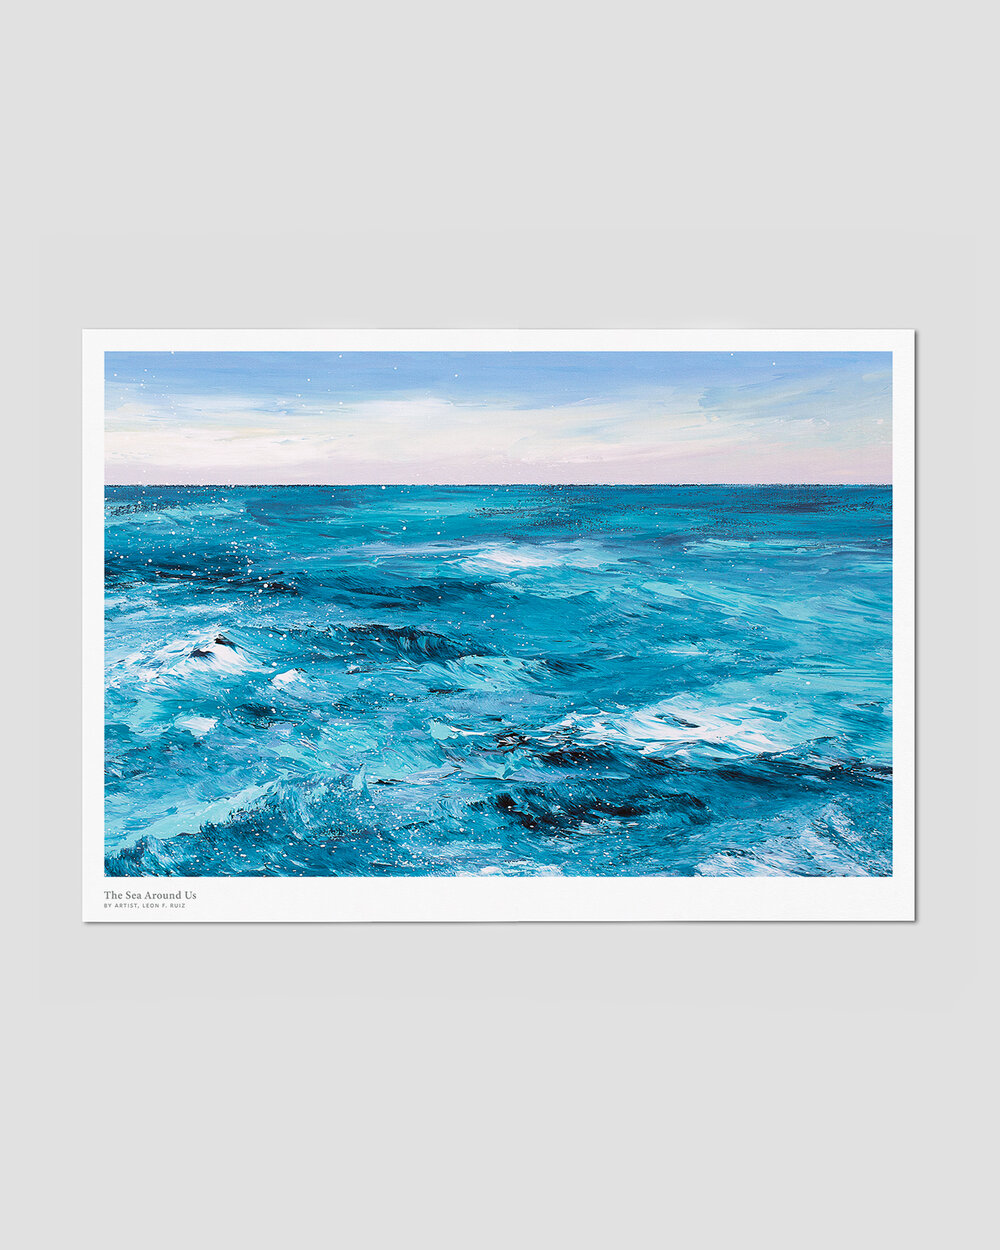 Catch a Wave is a 18x24 Original Acrylic Painting on Canvas — Leon F Ruiz